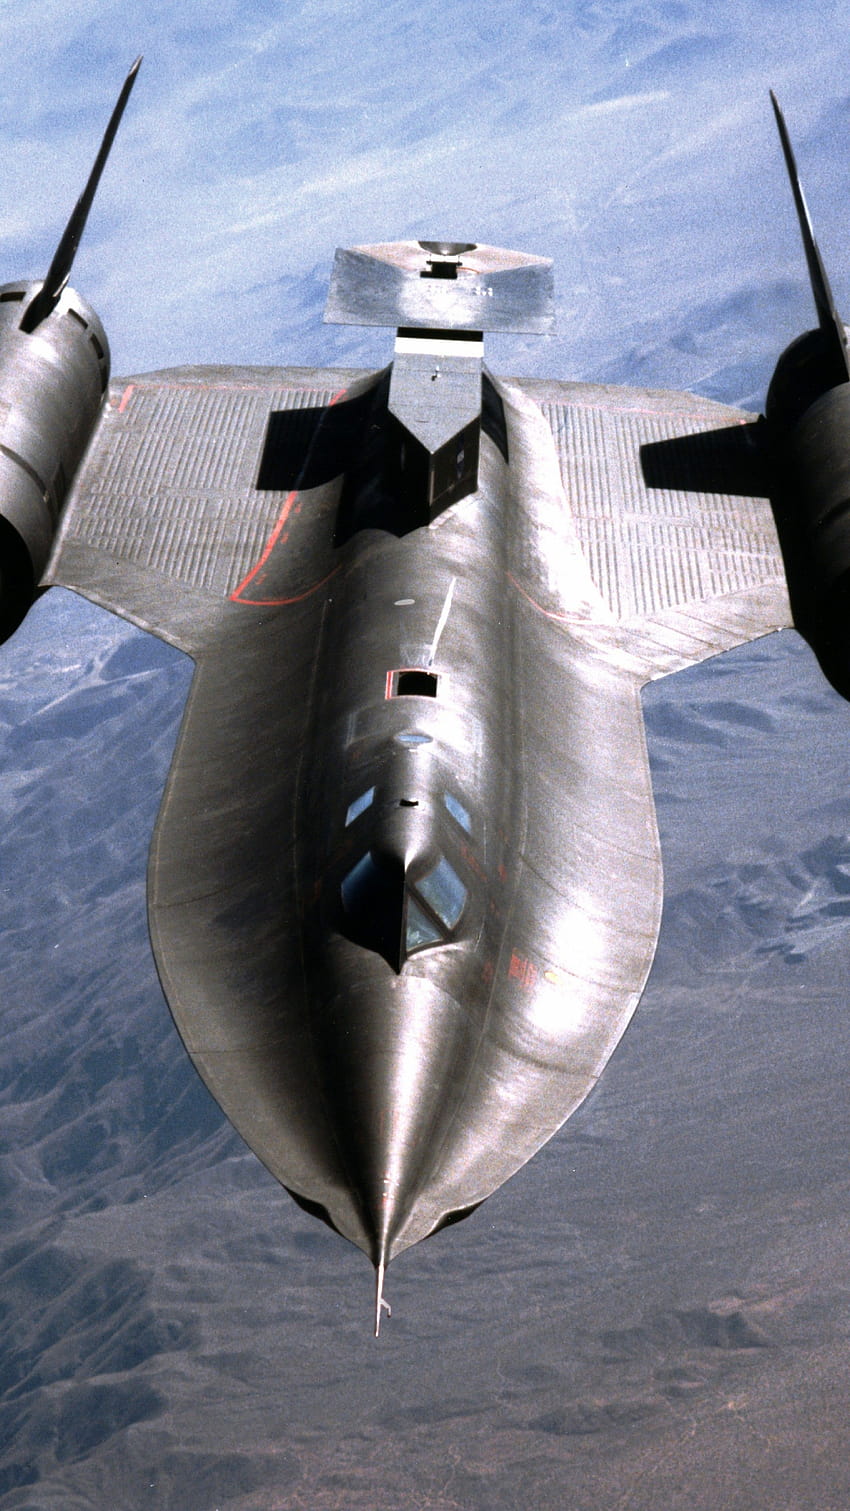 SR-71 Blackbird reconnaissance aircraft - Stock Image - C011/3616 - Science  Photo Library